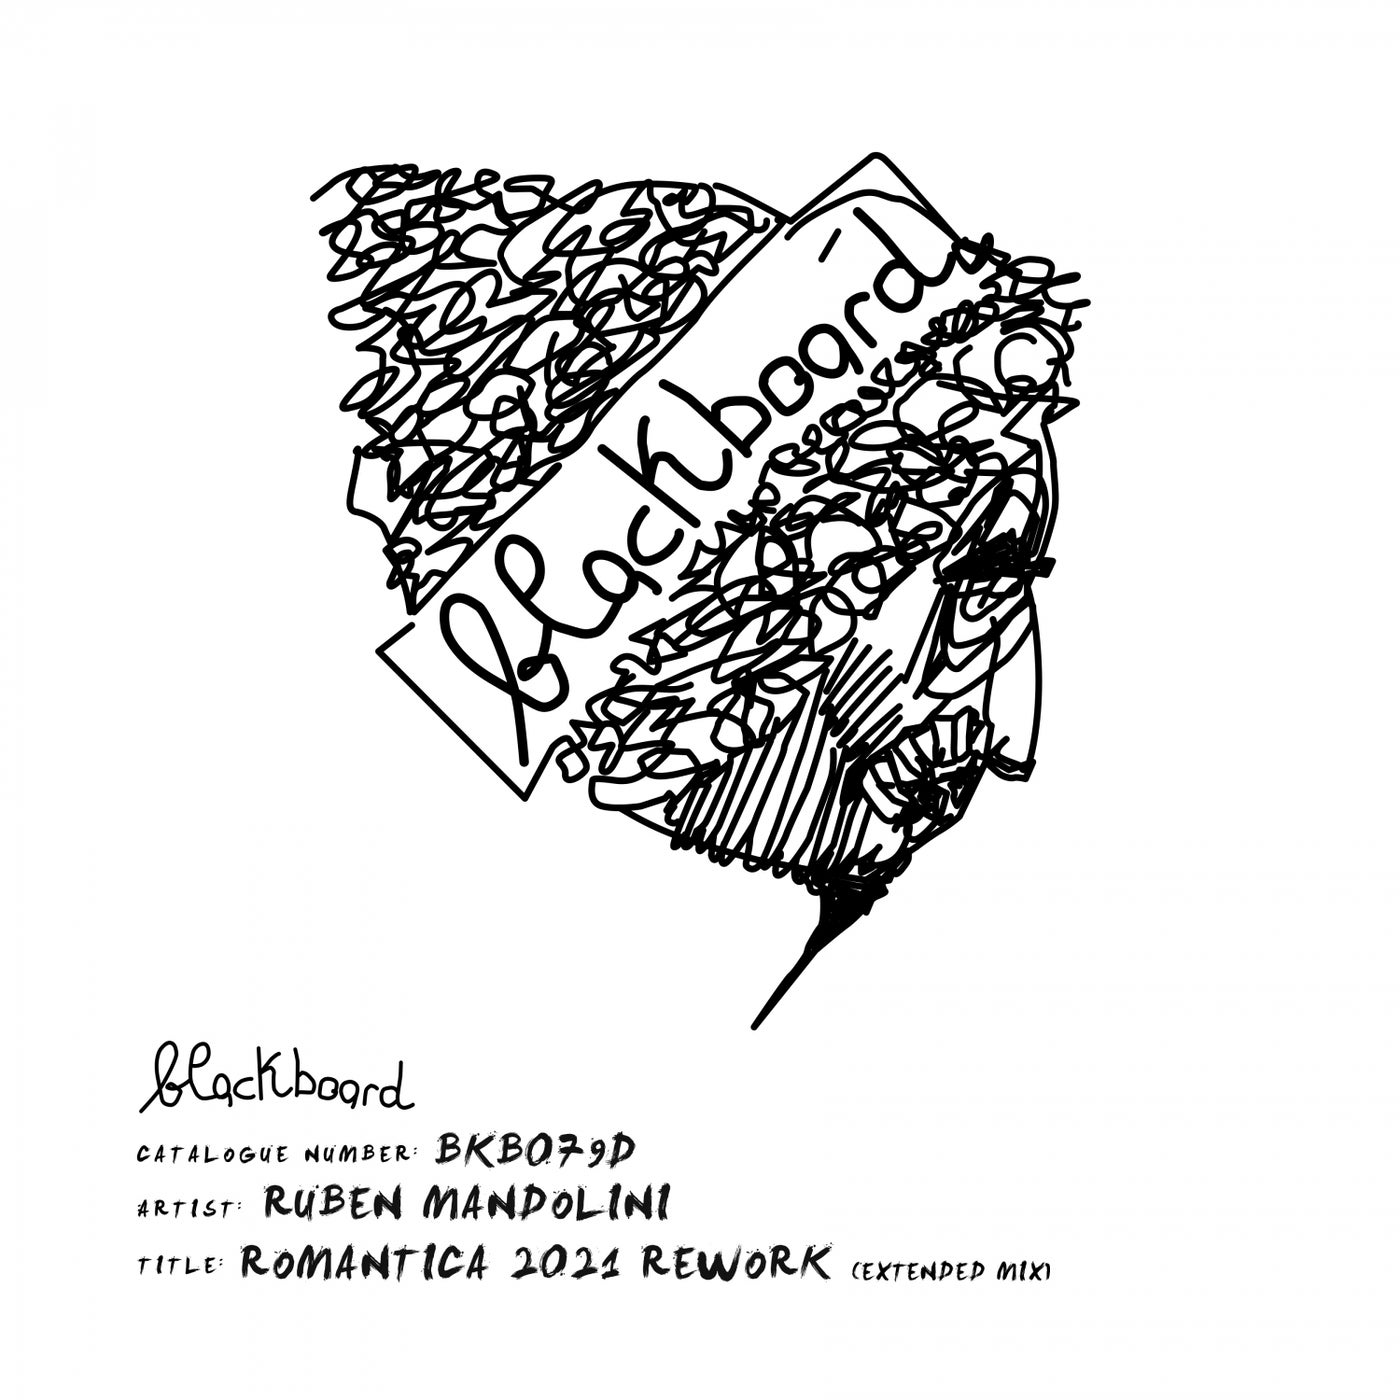 Ruben Mandolini - Romantica (2021 Extended Rework) [BKB079D]